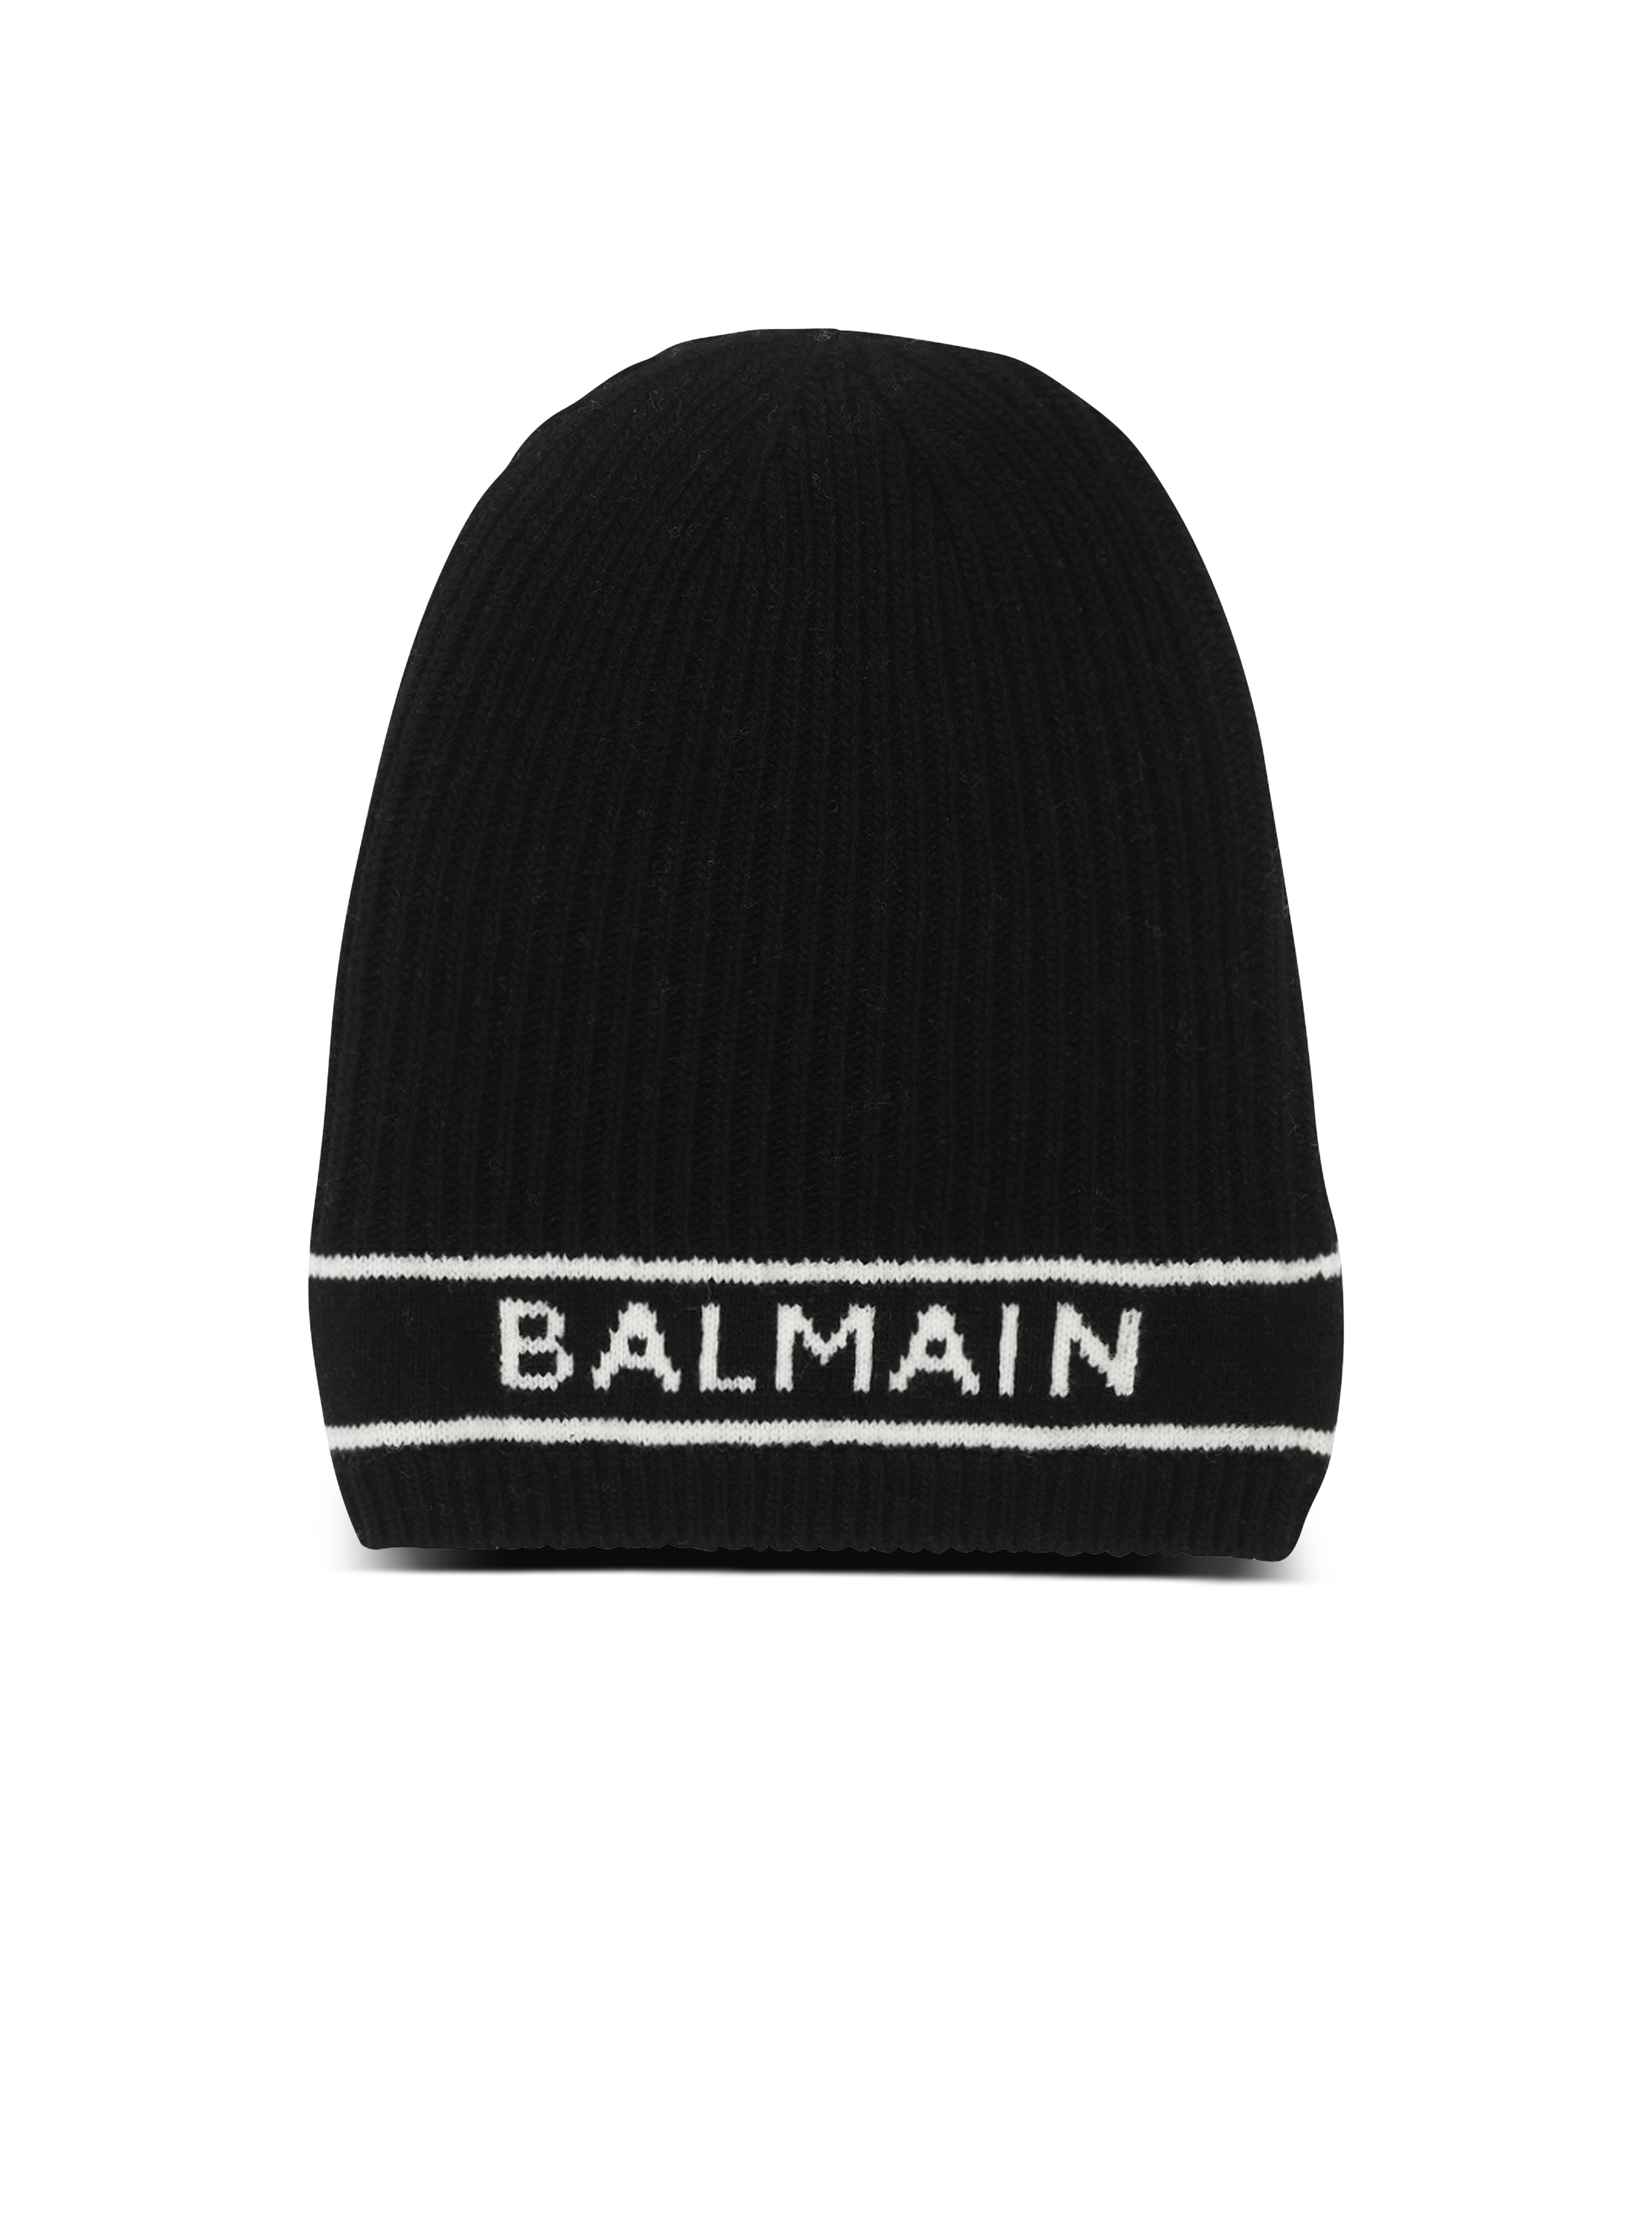 Wool beanie with embroidered Balmain logo, black